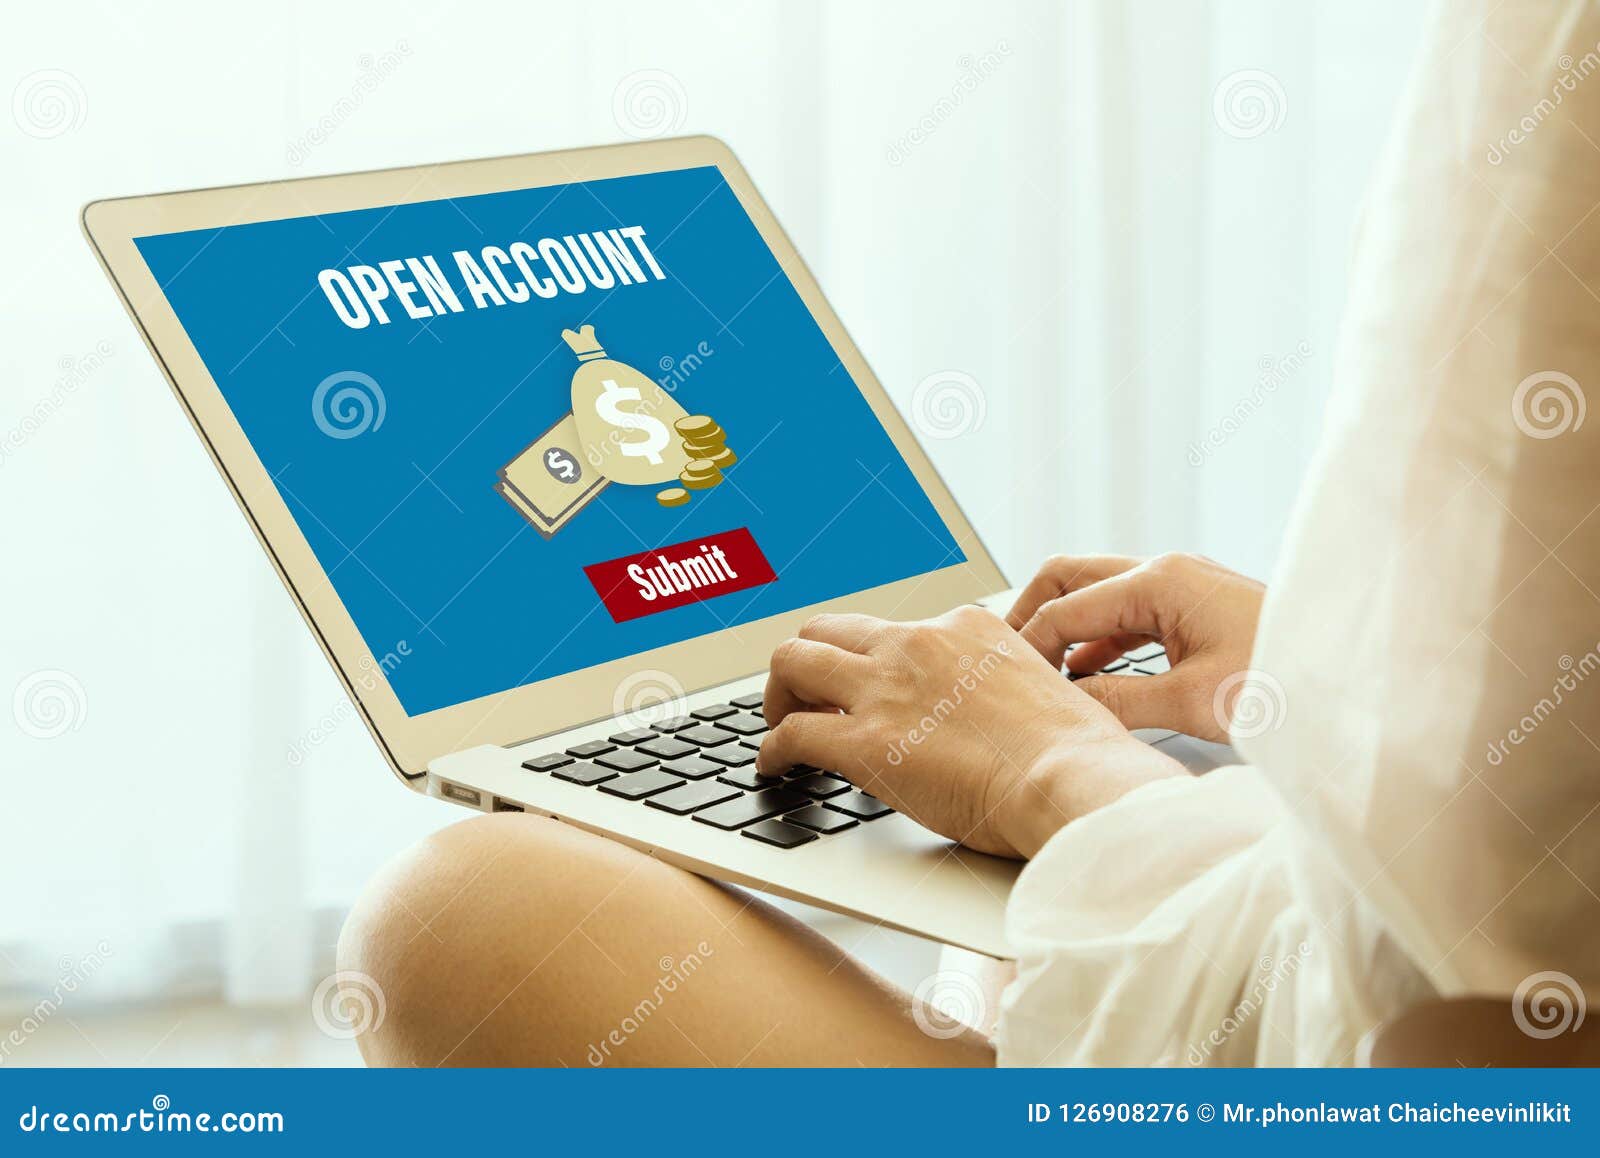 open a bank account online